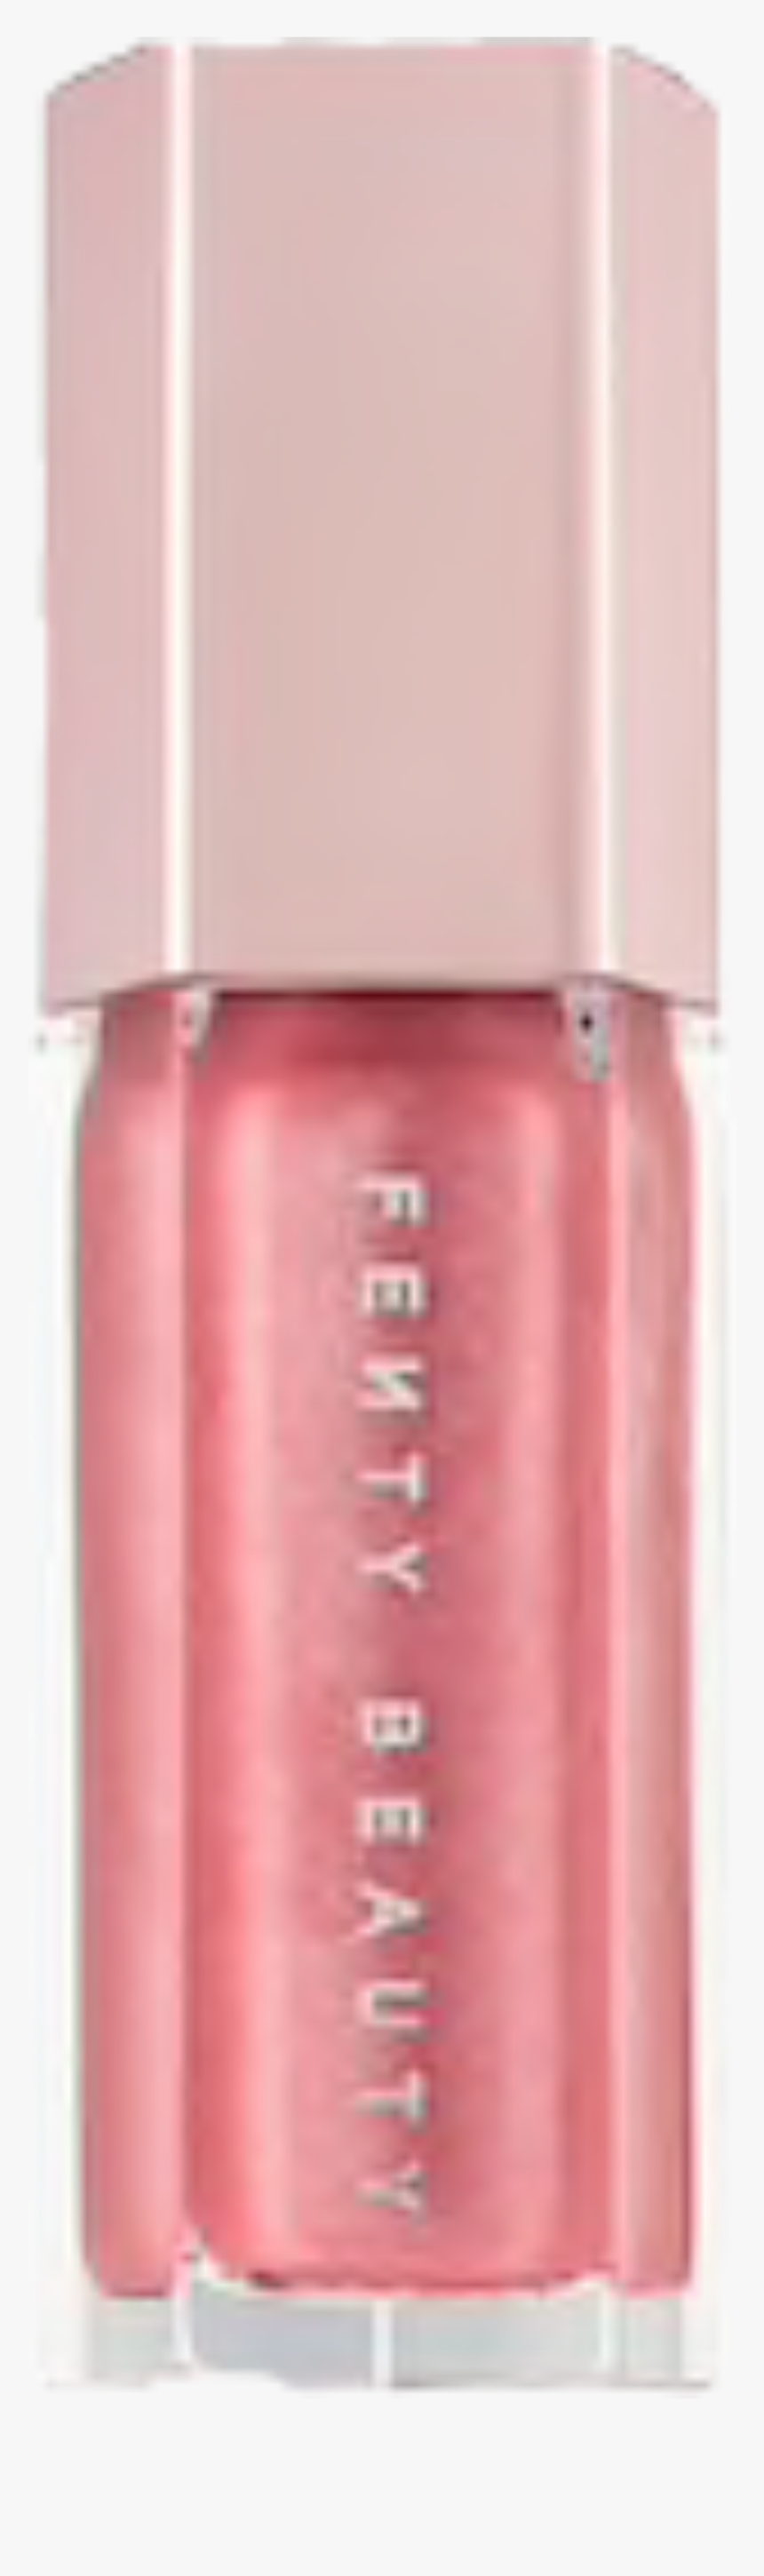 #sticker #fenty #fentybeauty #nichememes #niche #png - Fenty Gloss, Transparent Png, Free Download